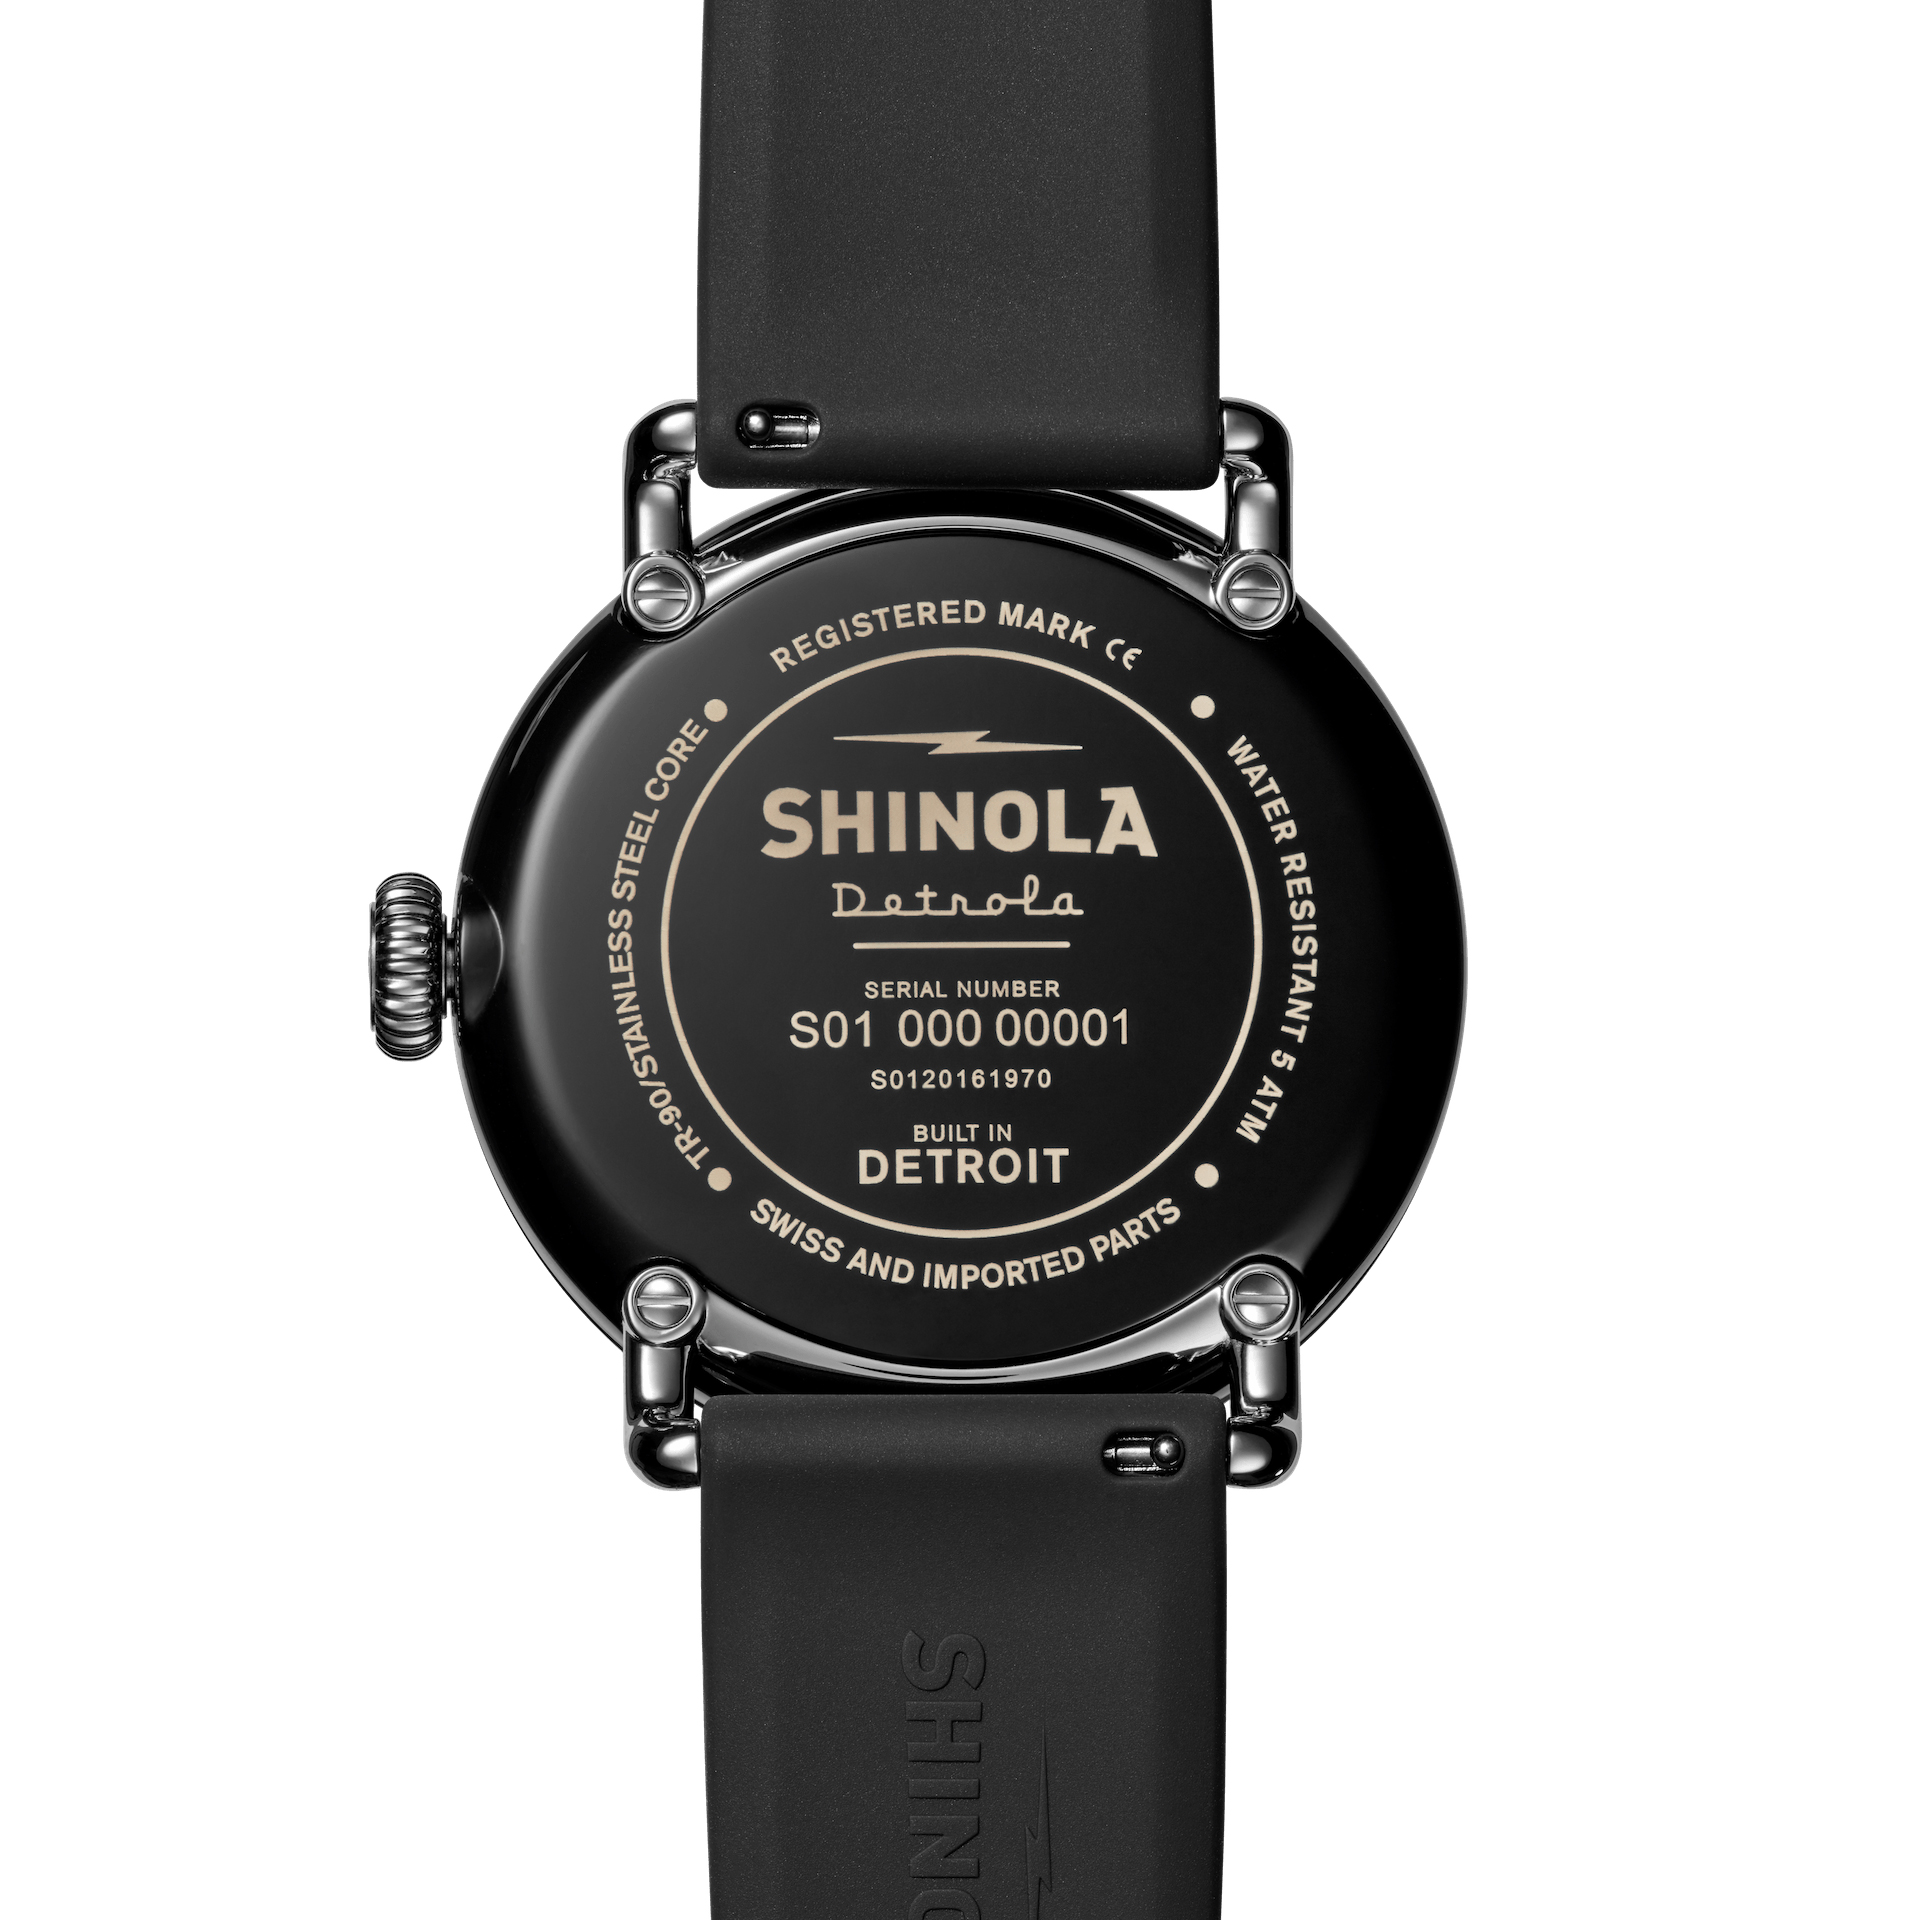 University of Notre Dame Shinola Watch, The Detrola 43mm Black Dial at M.LaHart & Co. - Image 3